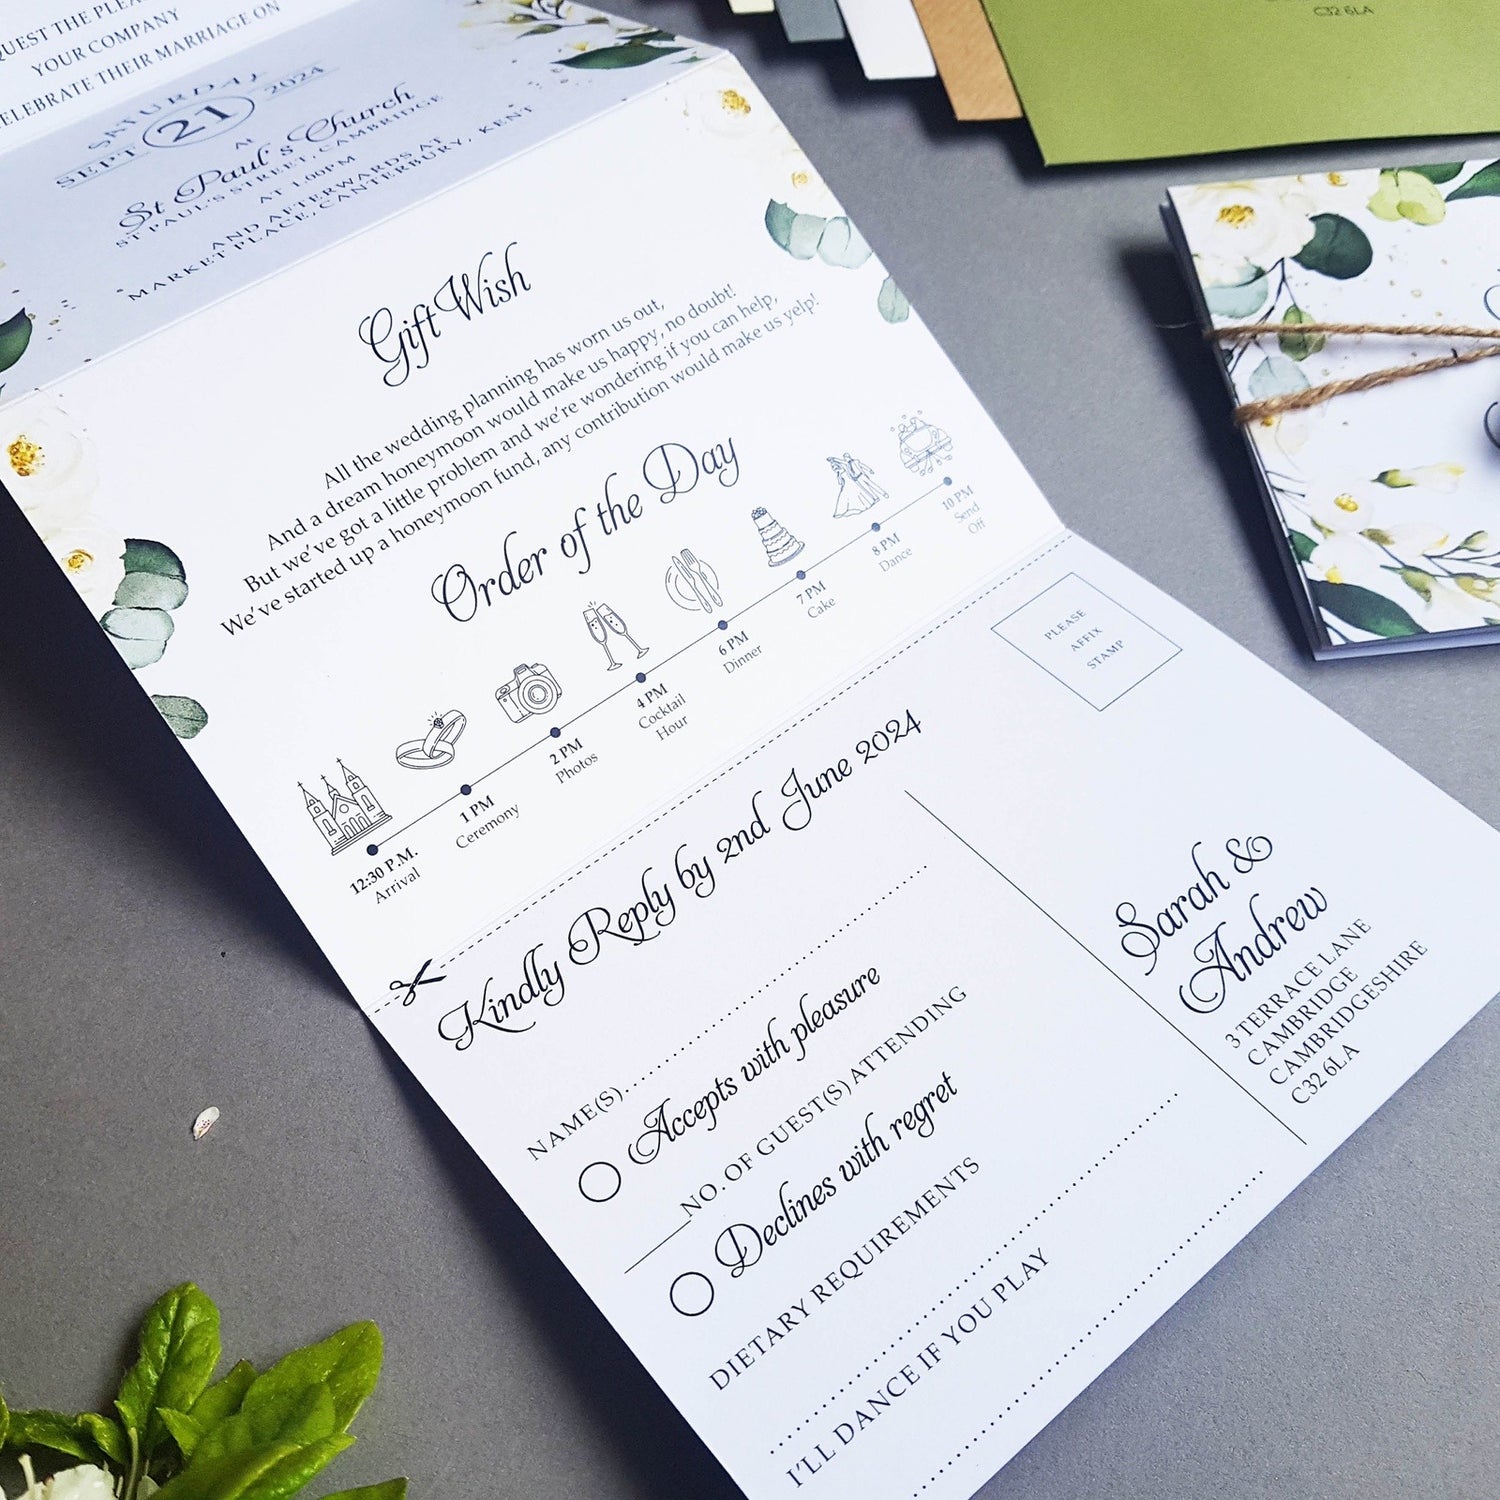 Eucalyptus White Floral Concertina Wedding Invitations Sample